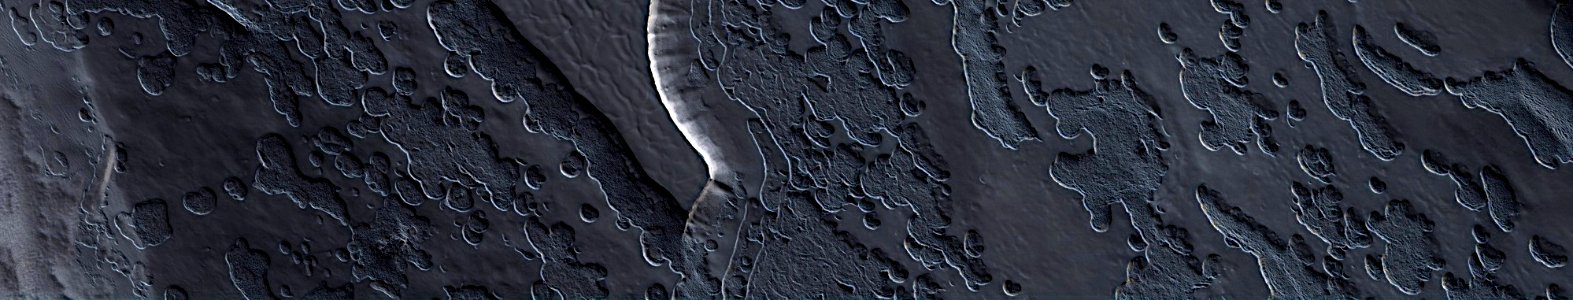 Mars - Polar Layered Deposits Stratigraphic photo